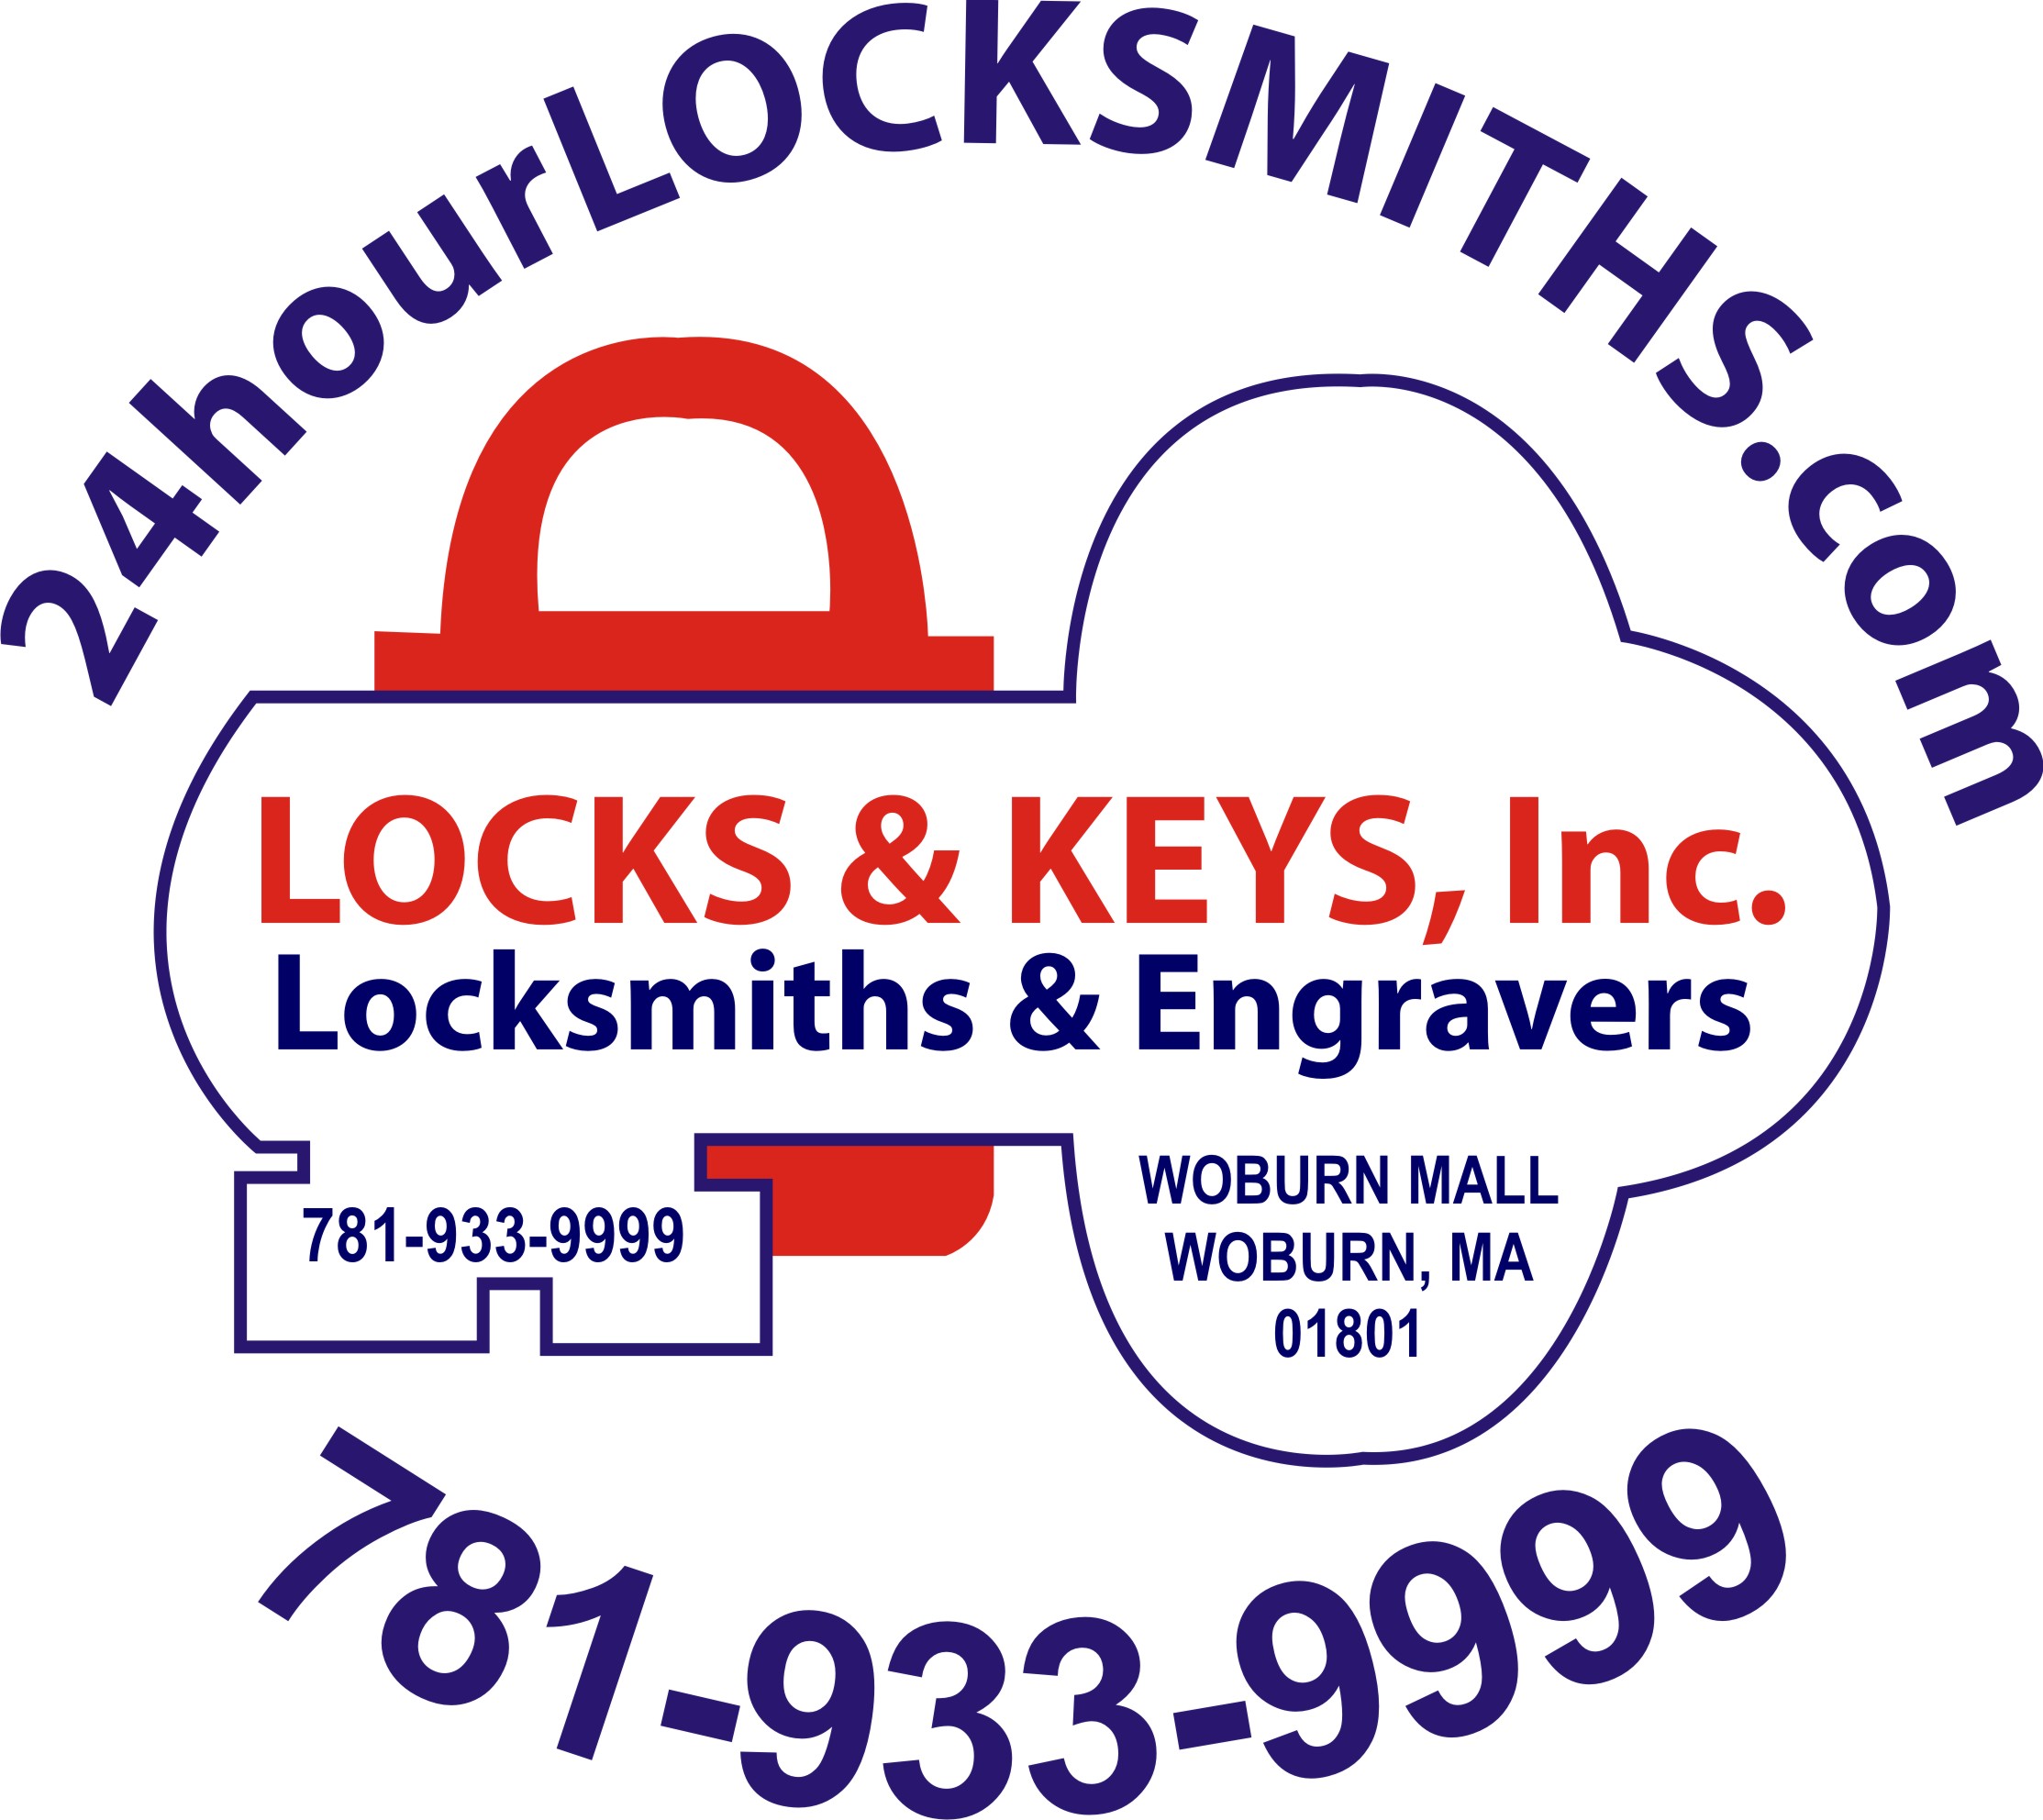 Billerica MA locksmith